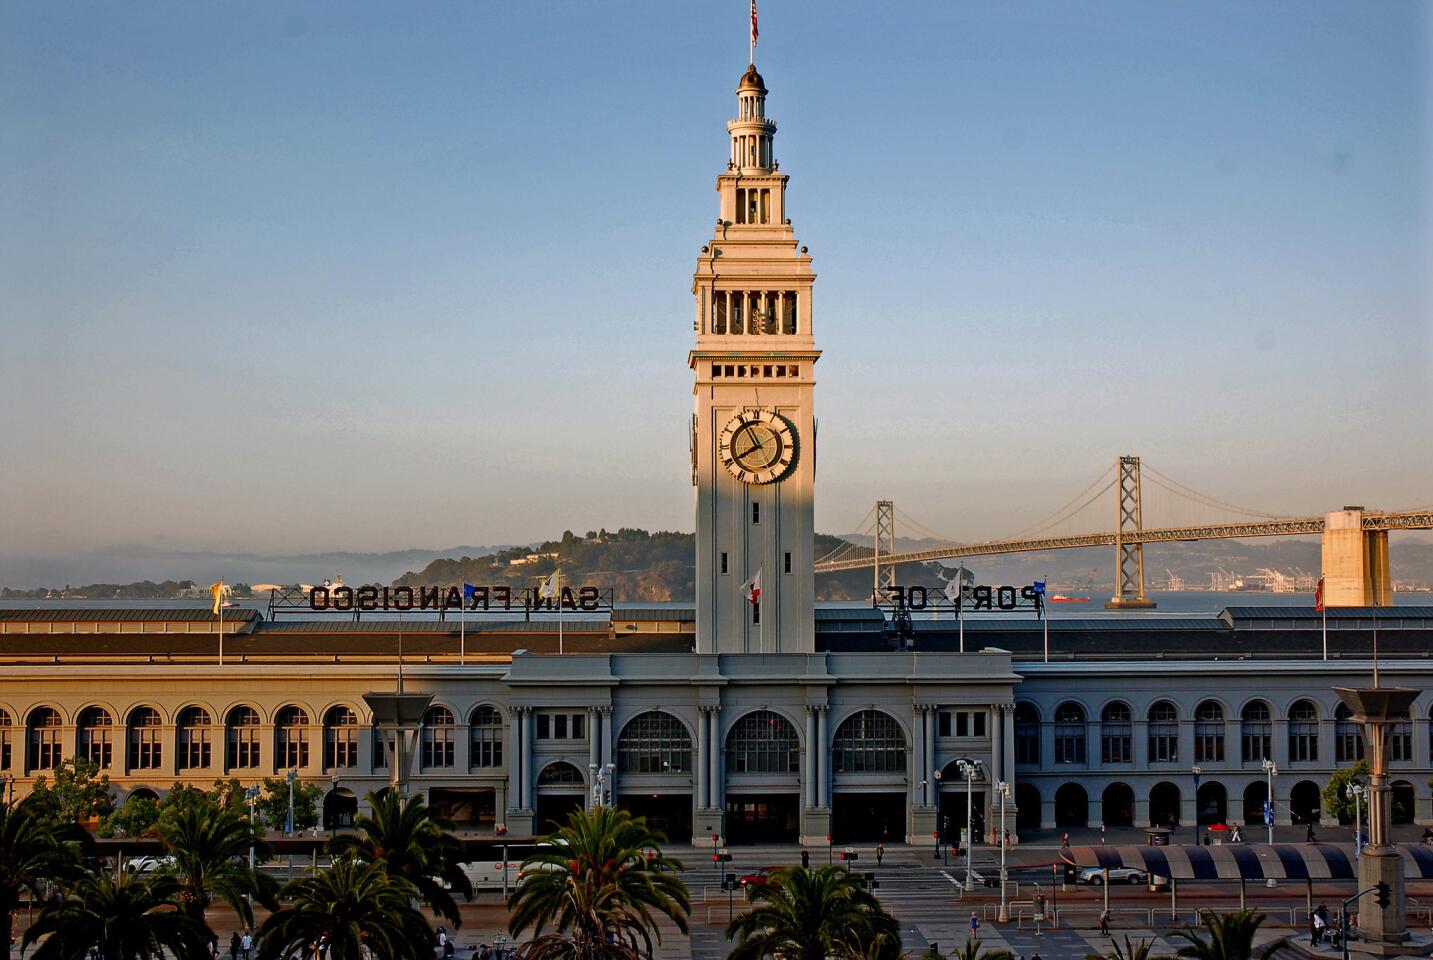 San Francisco: Where Market Street is born